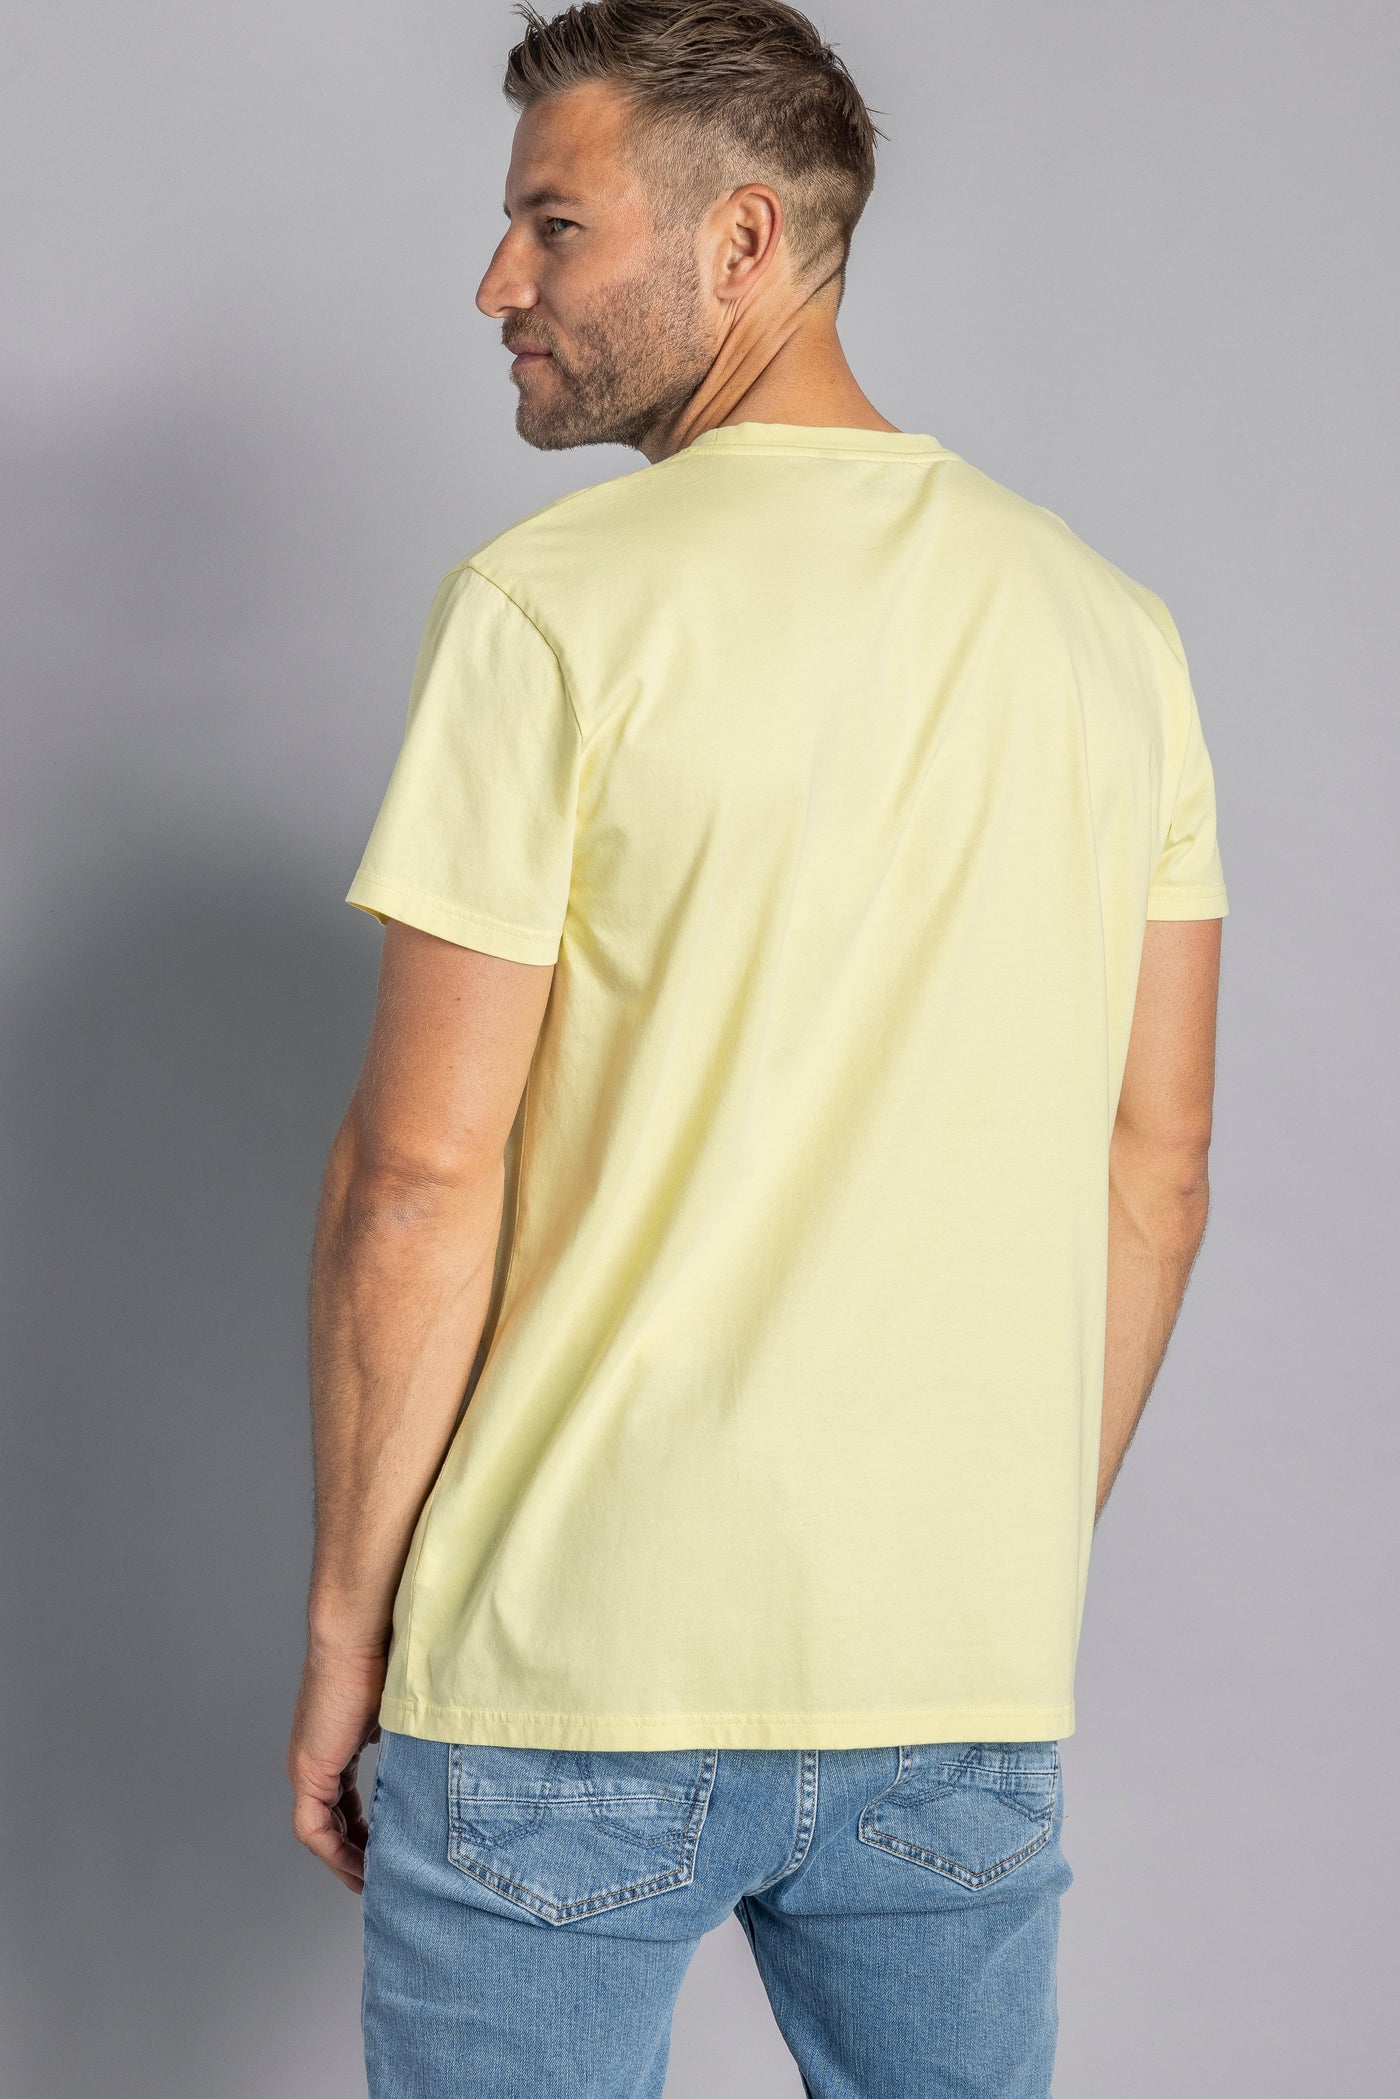 Premium Blank GOTS T-Shirt STANDARD, Zitrone